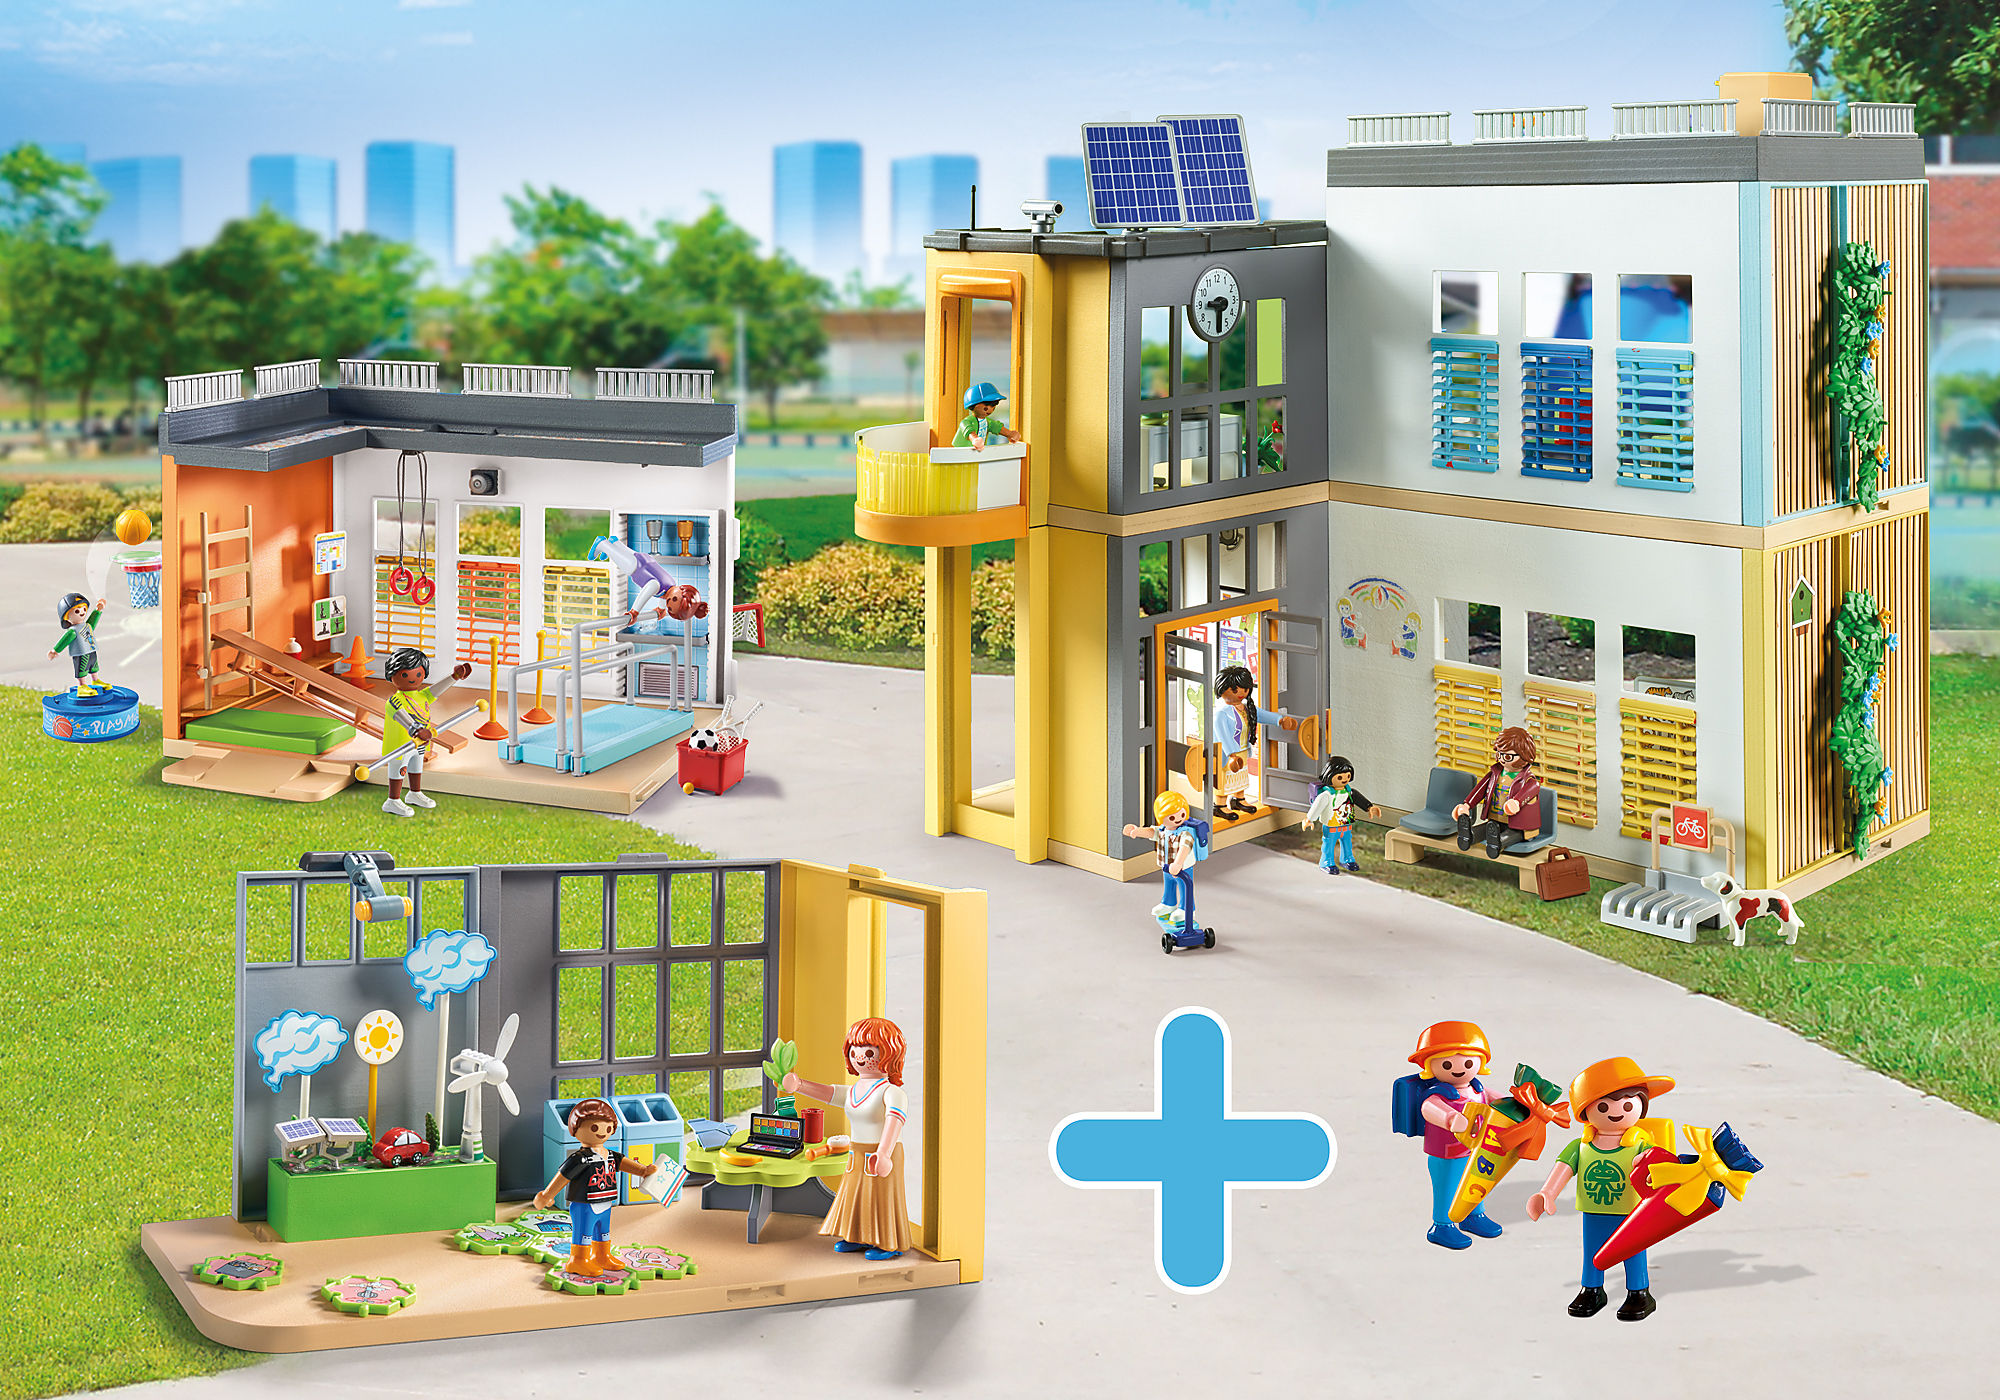 Playmobil® - Enfants et ballons d'eau - 71166 - Playmobil® City Life